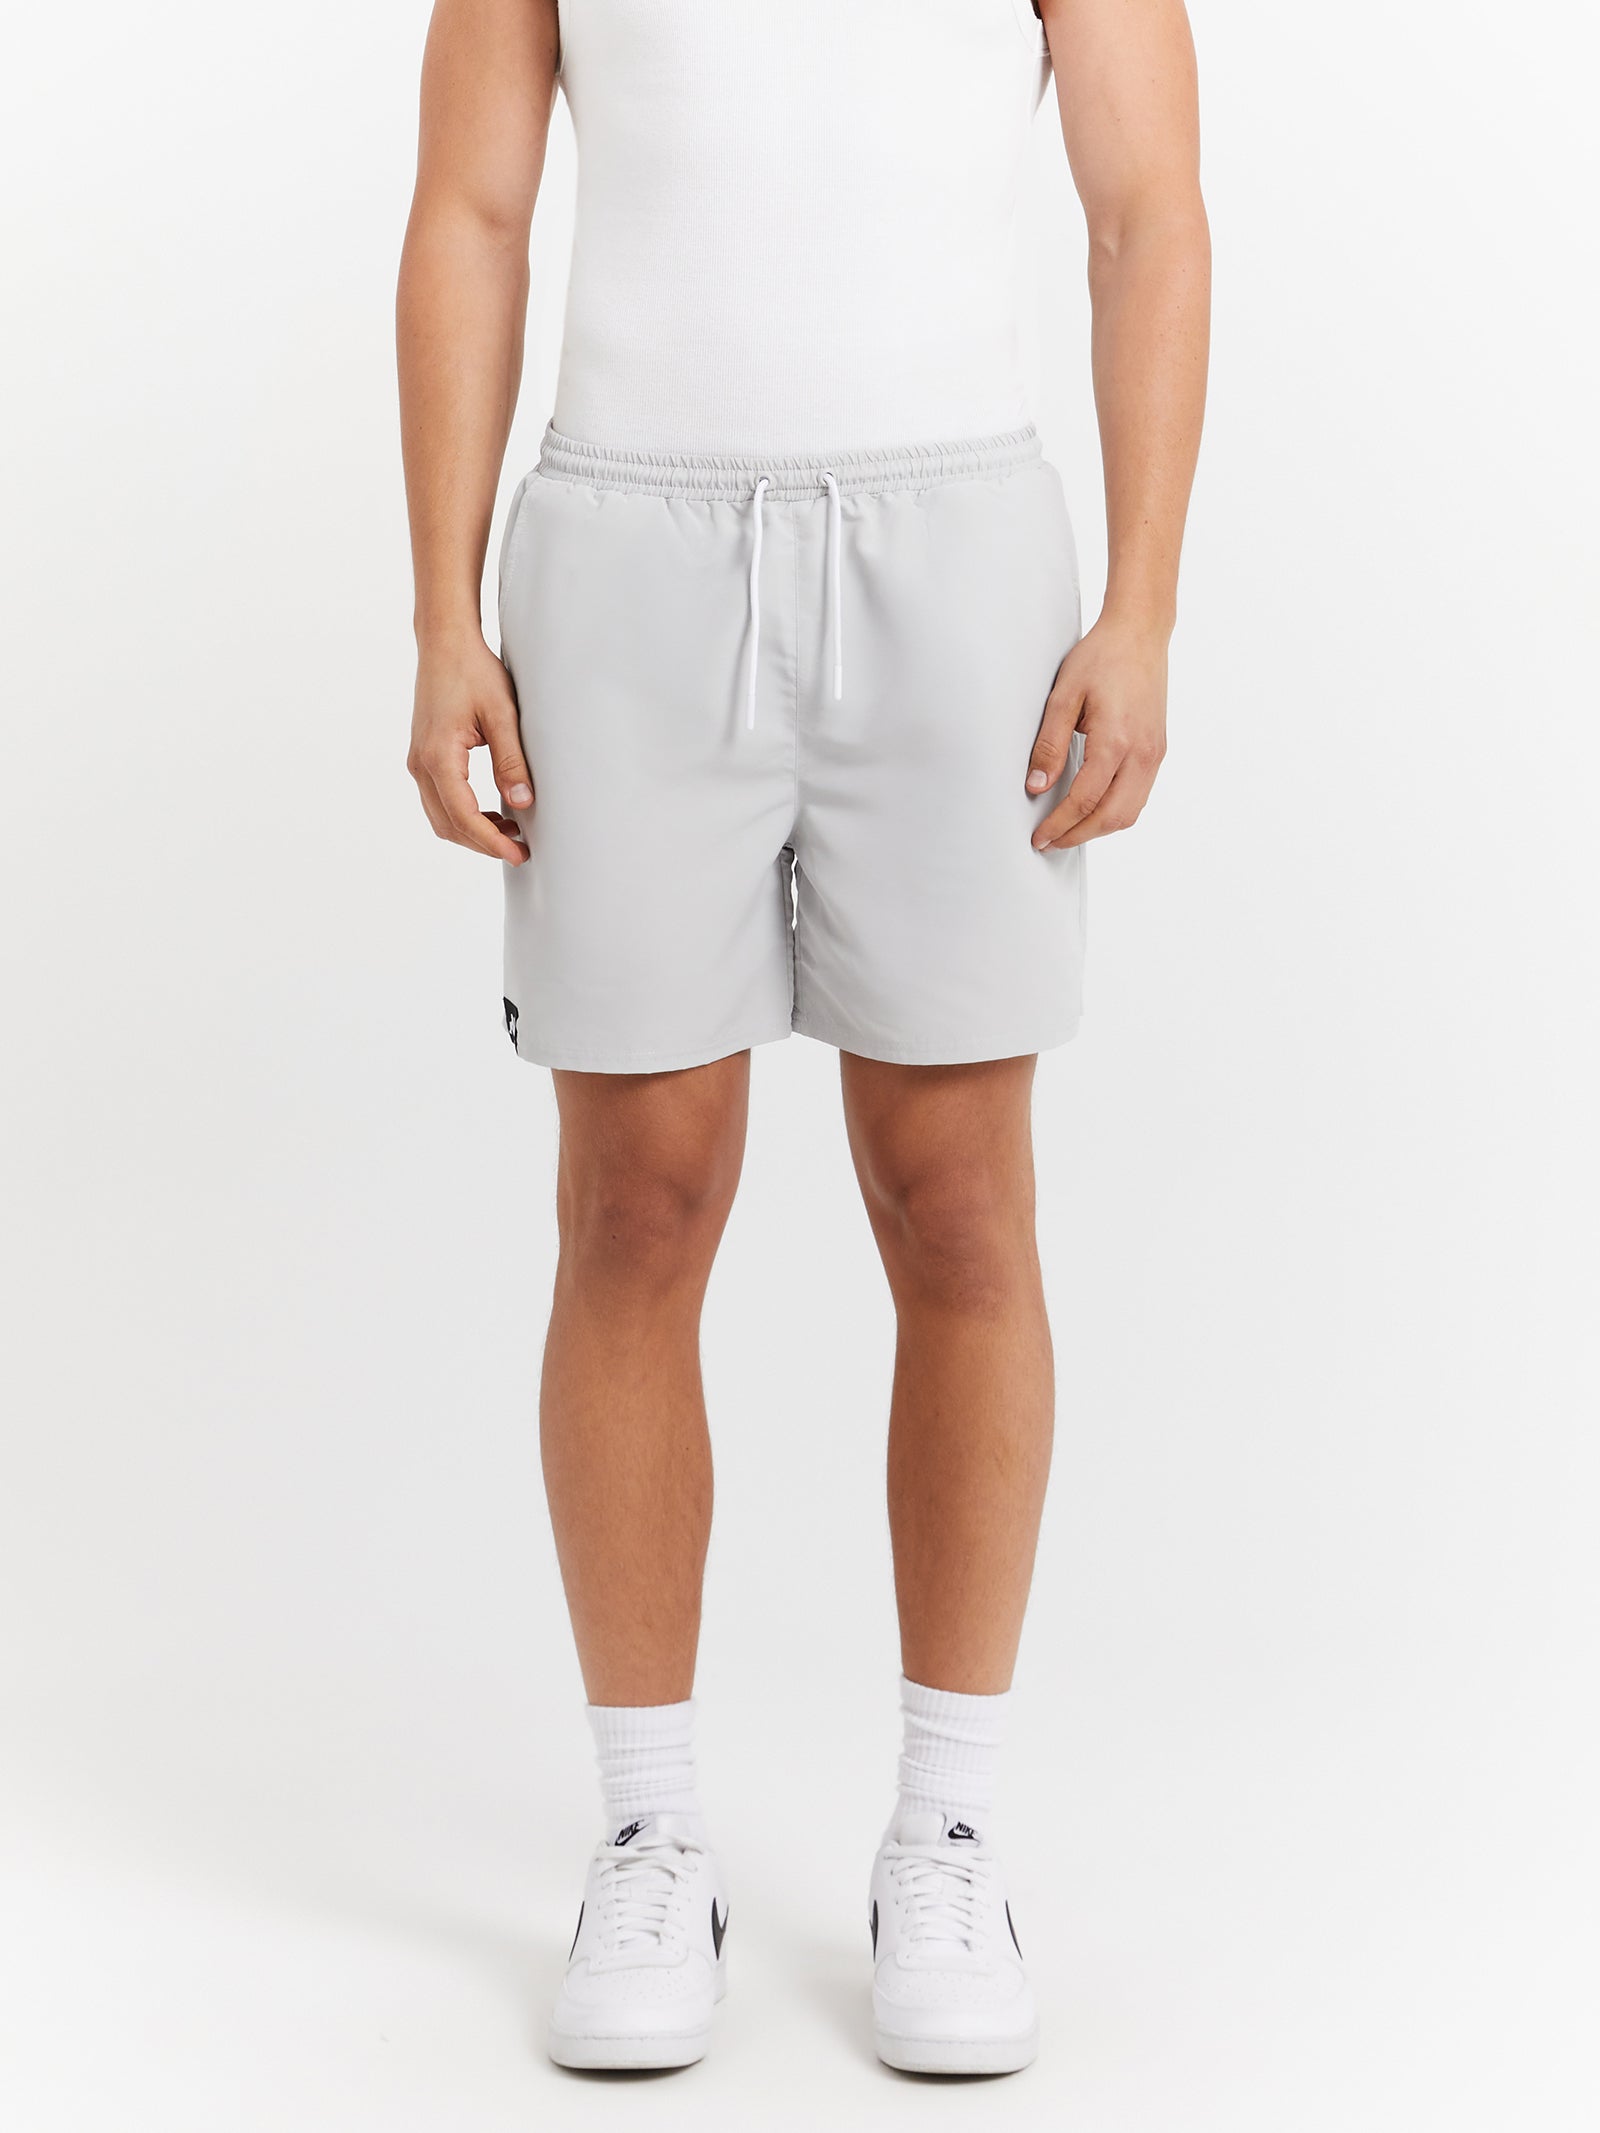 Authentic Hylon Shorts in Grey & White - Glue Store